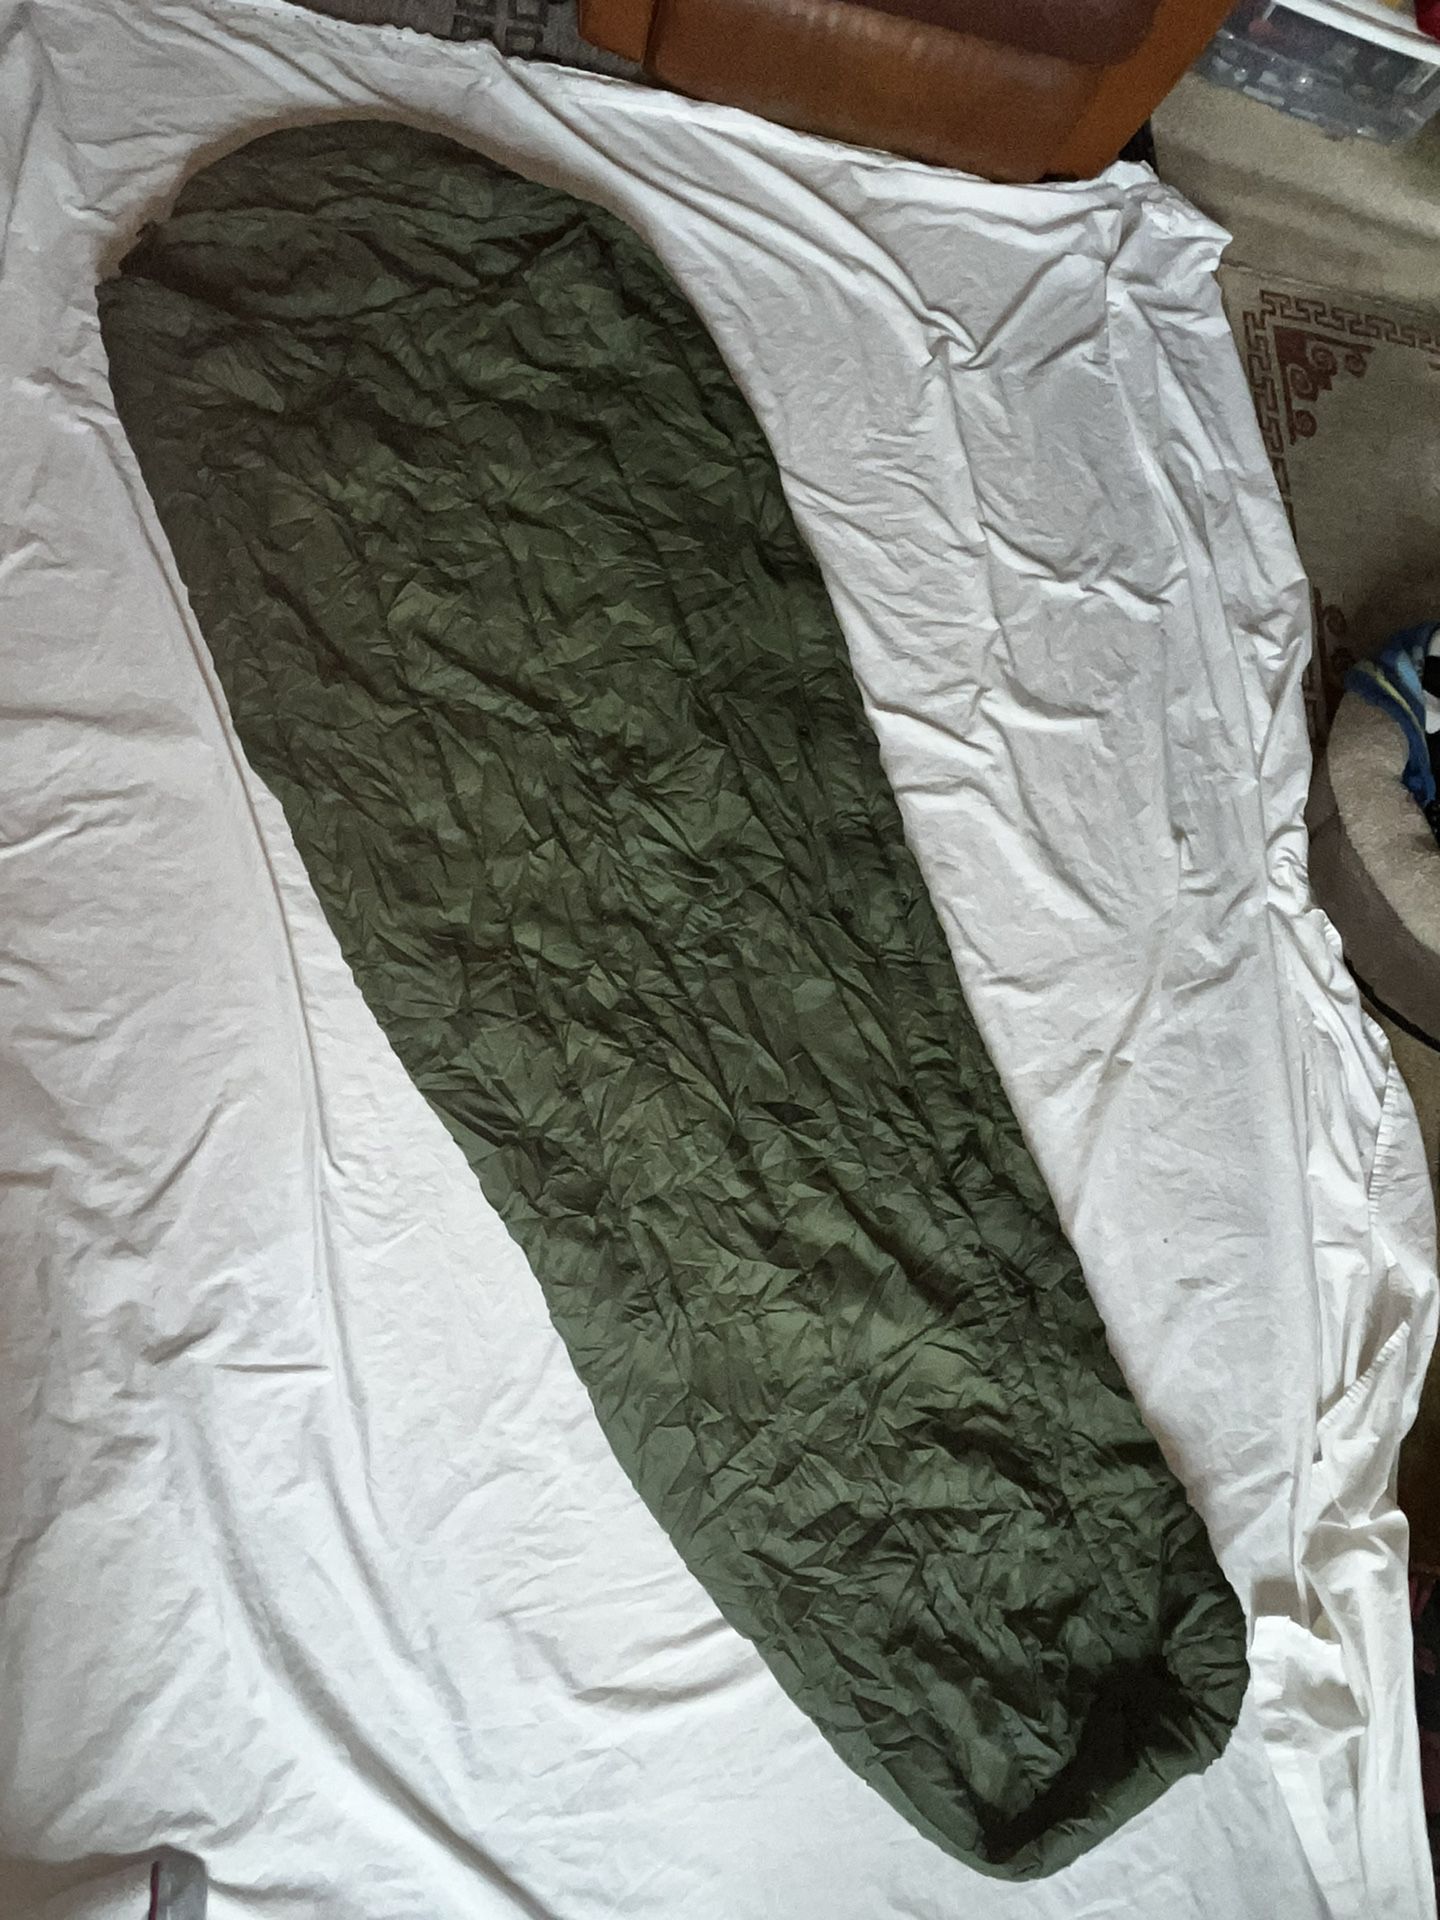 Sleeping Bag Is Army Modular Sleep System Intermediate Bag